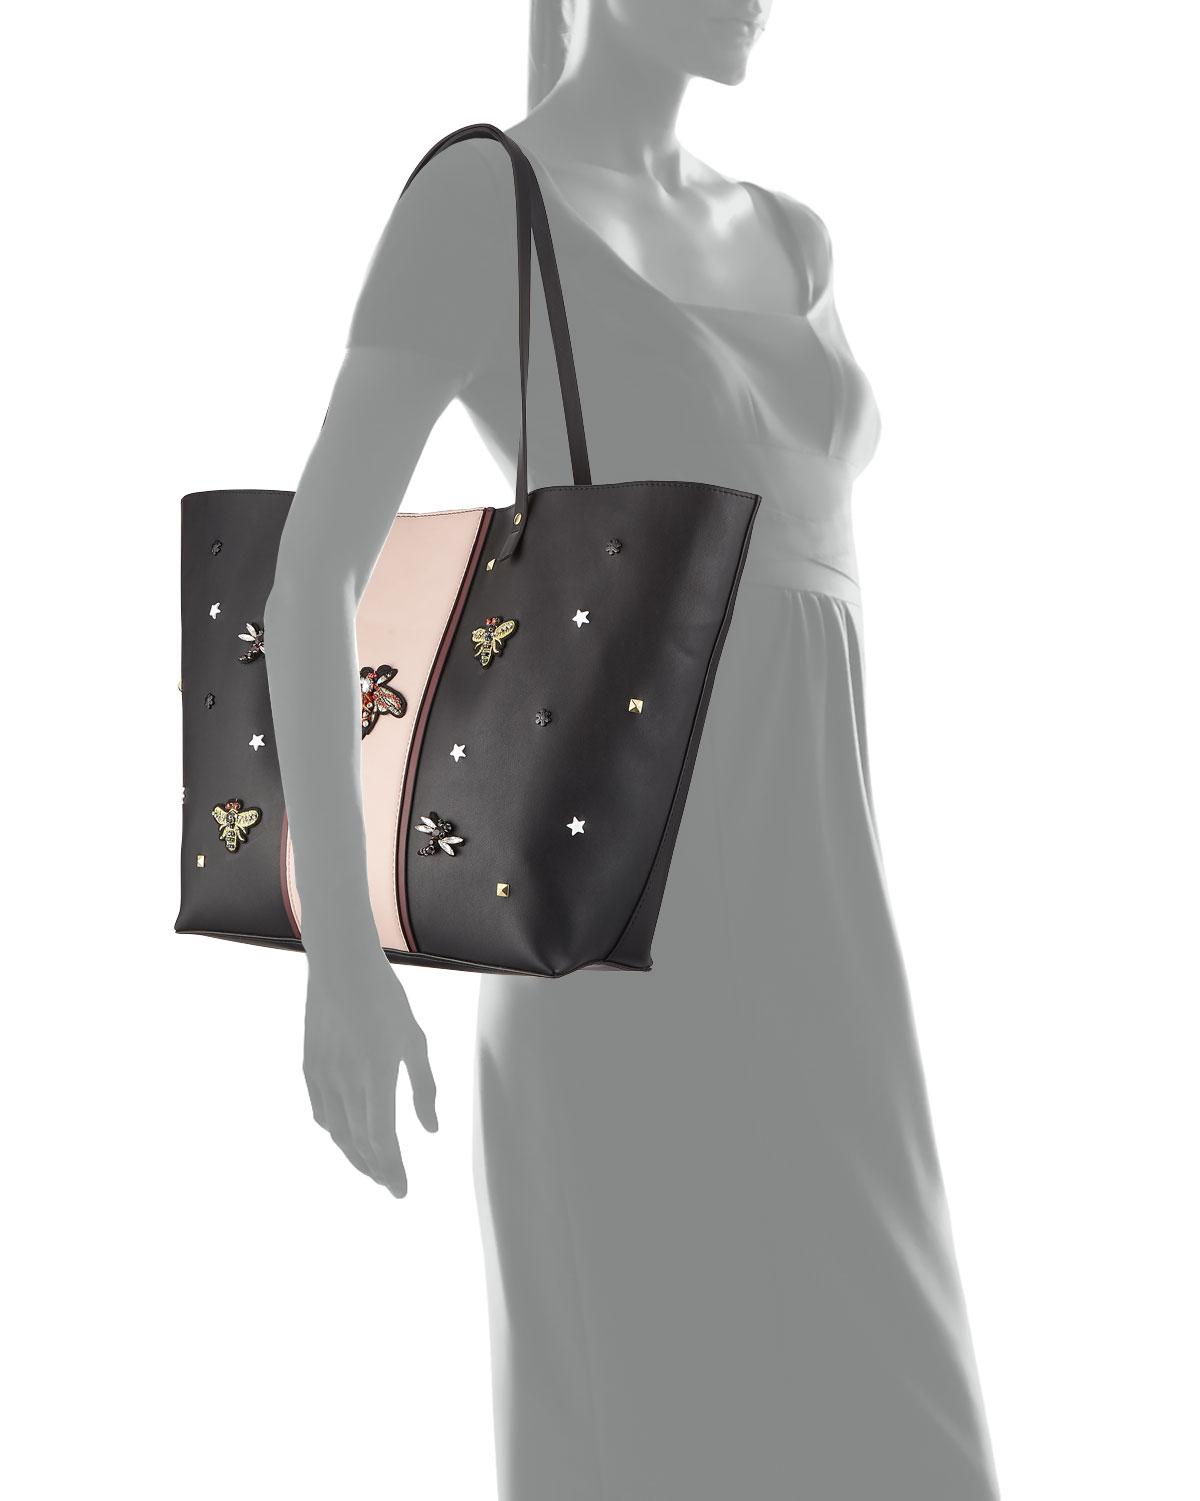 Neiman Marcus Queen Bee Faux Tote Bag in Black - Lyst